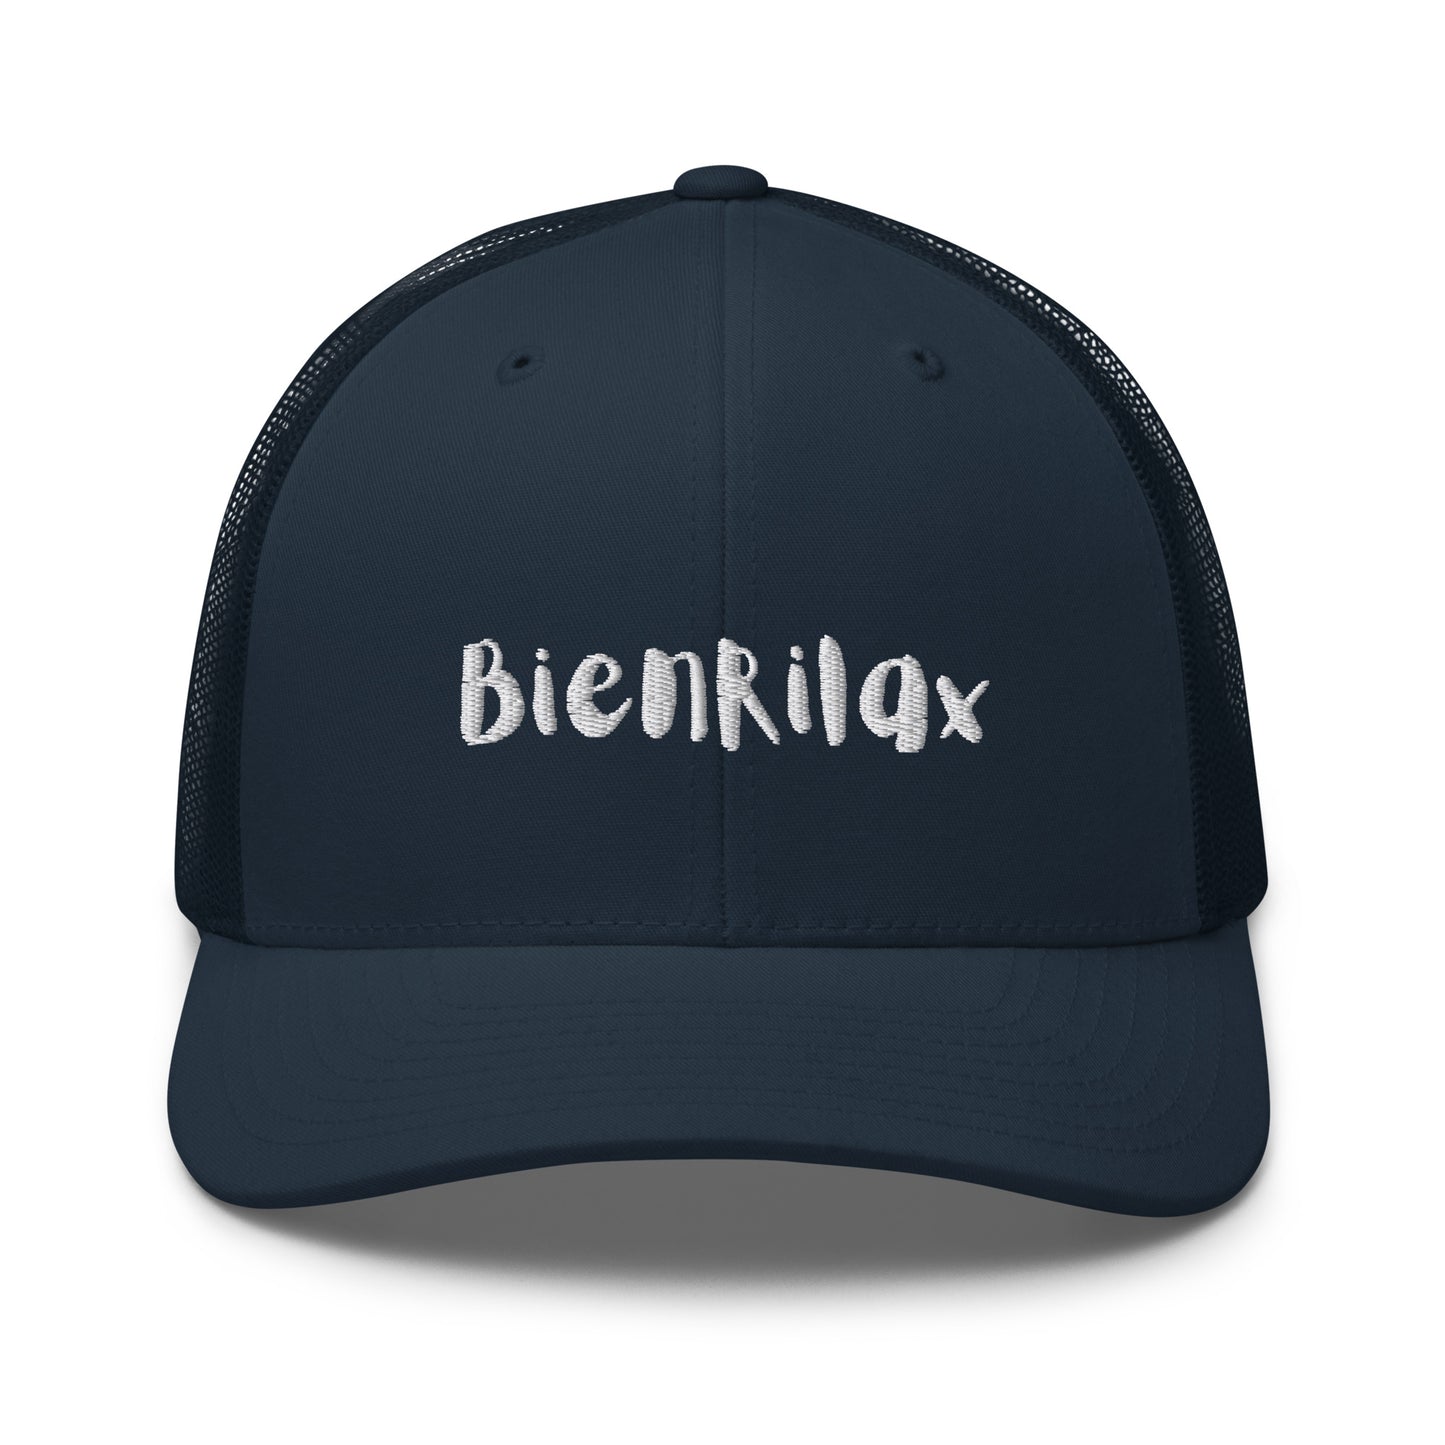 BienRilax Trucker Hat